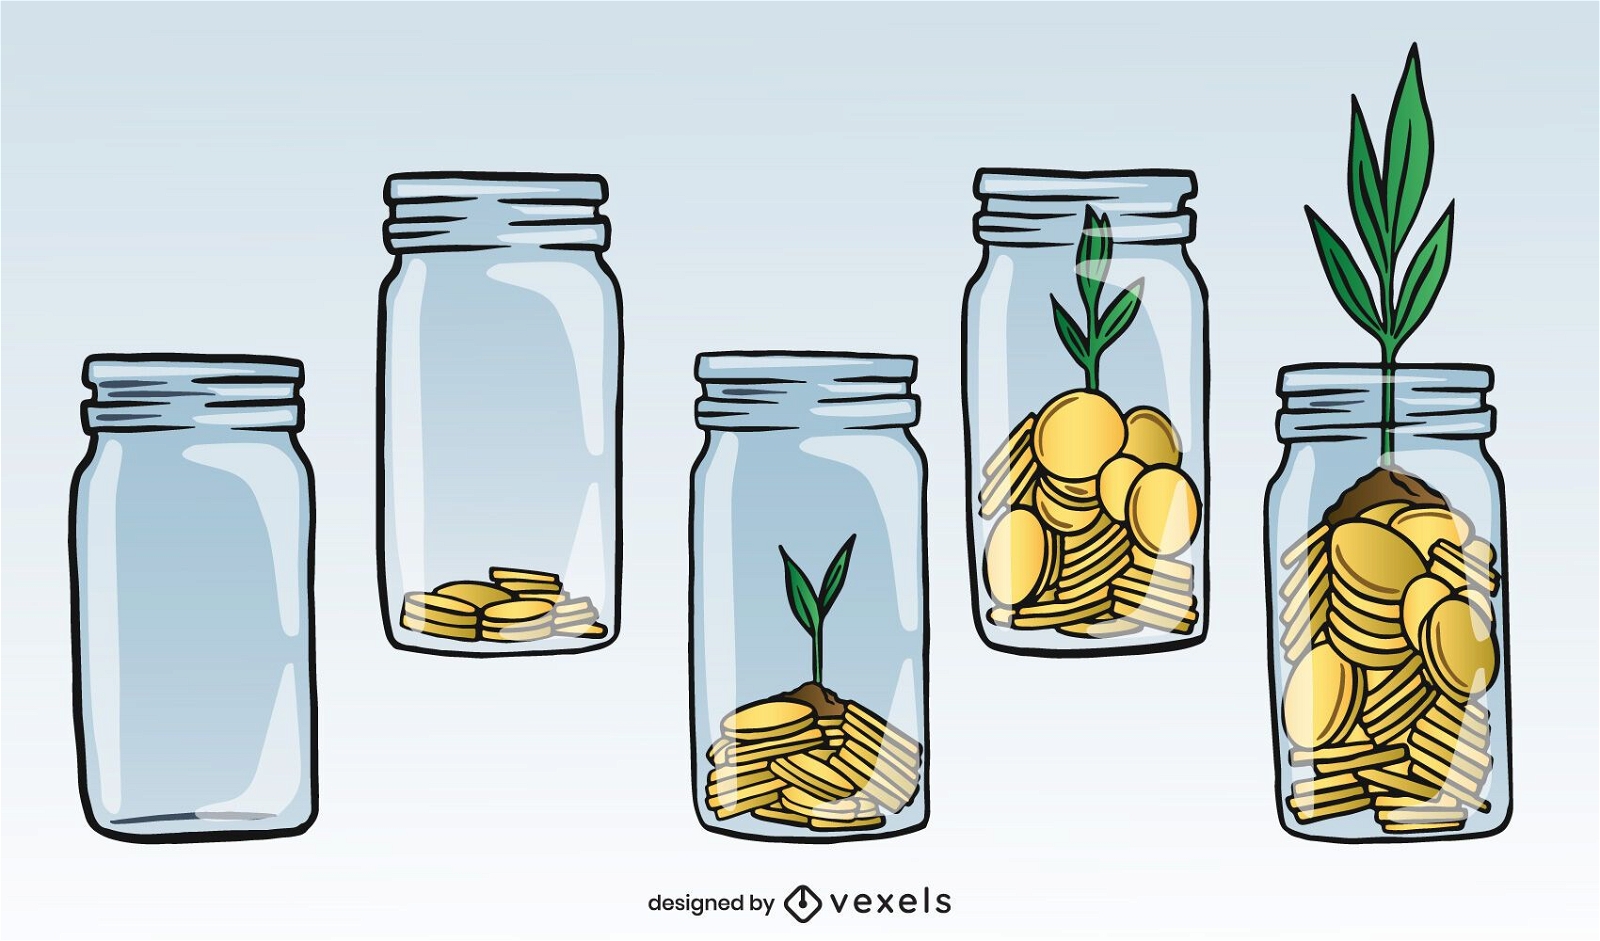 Money growing savings illustration